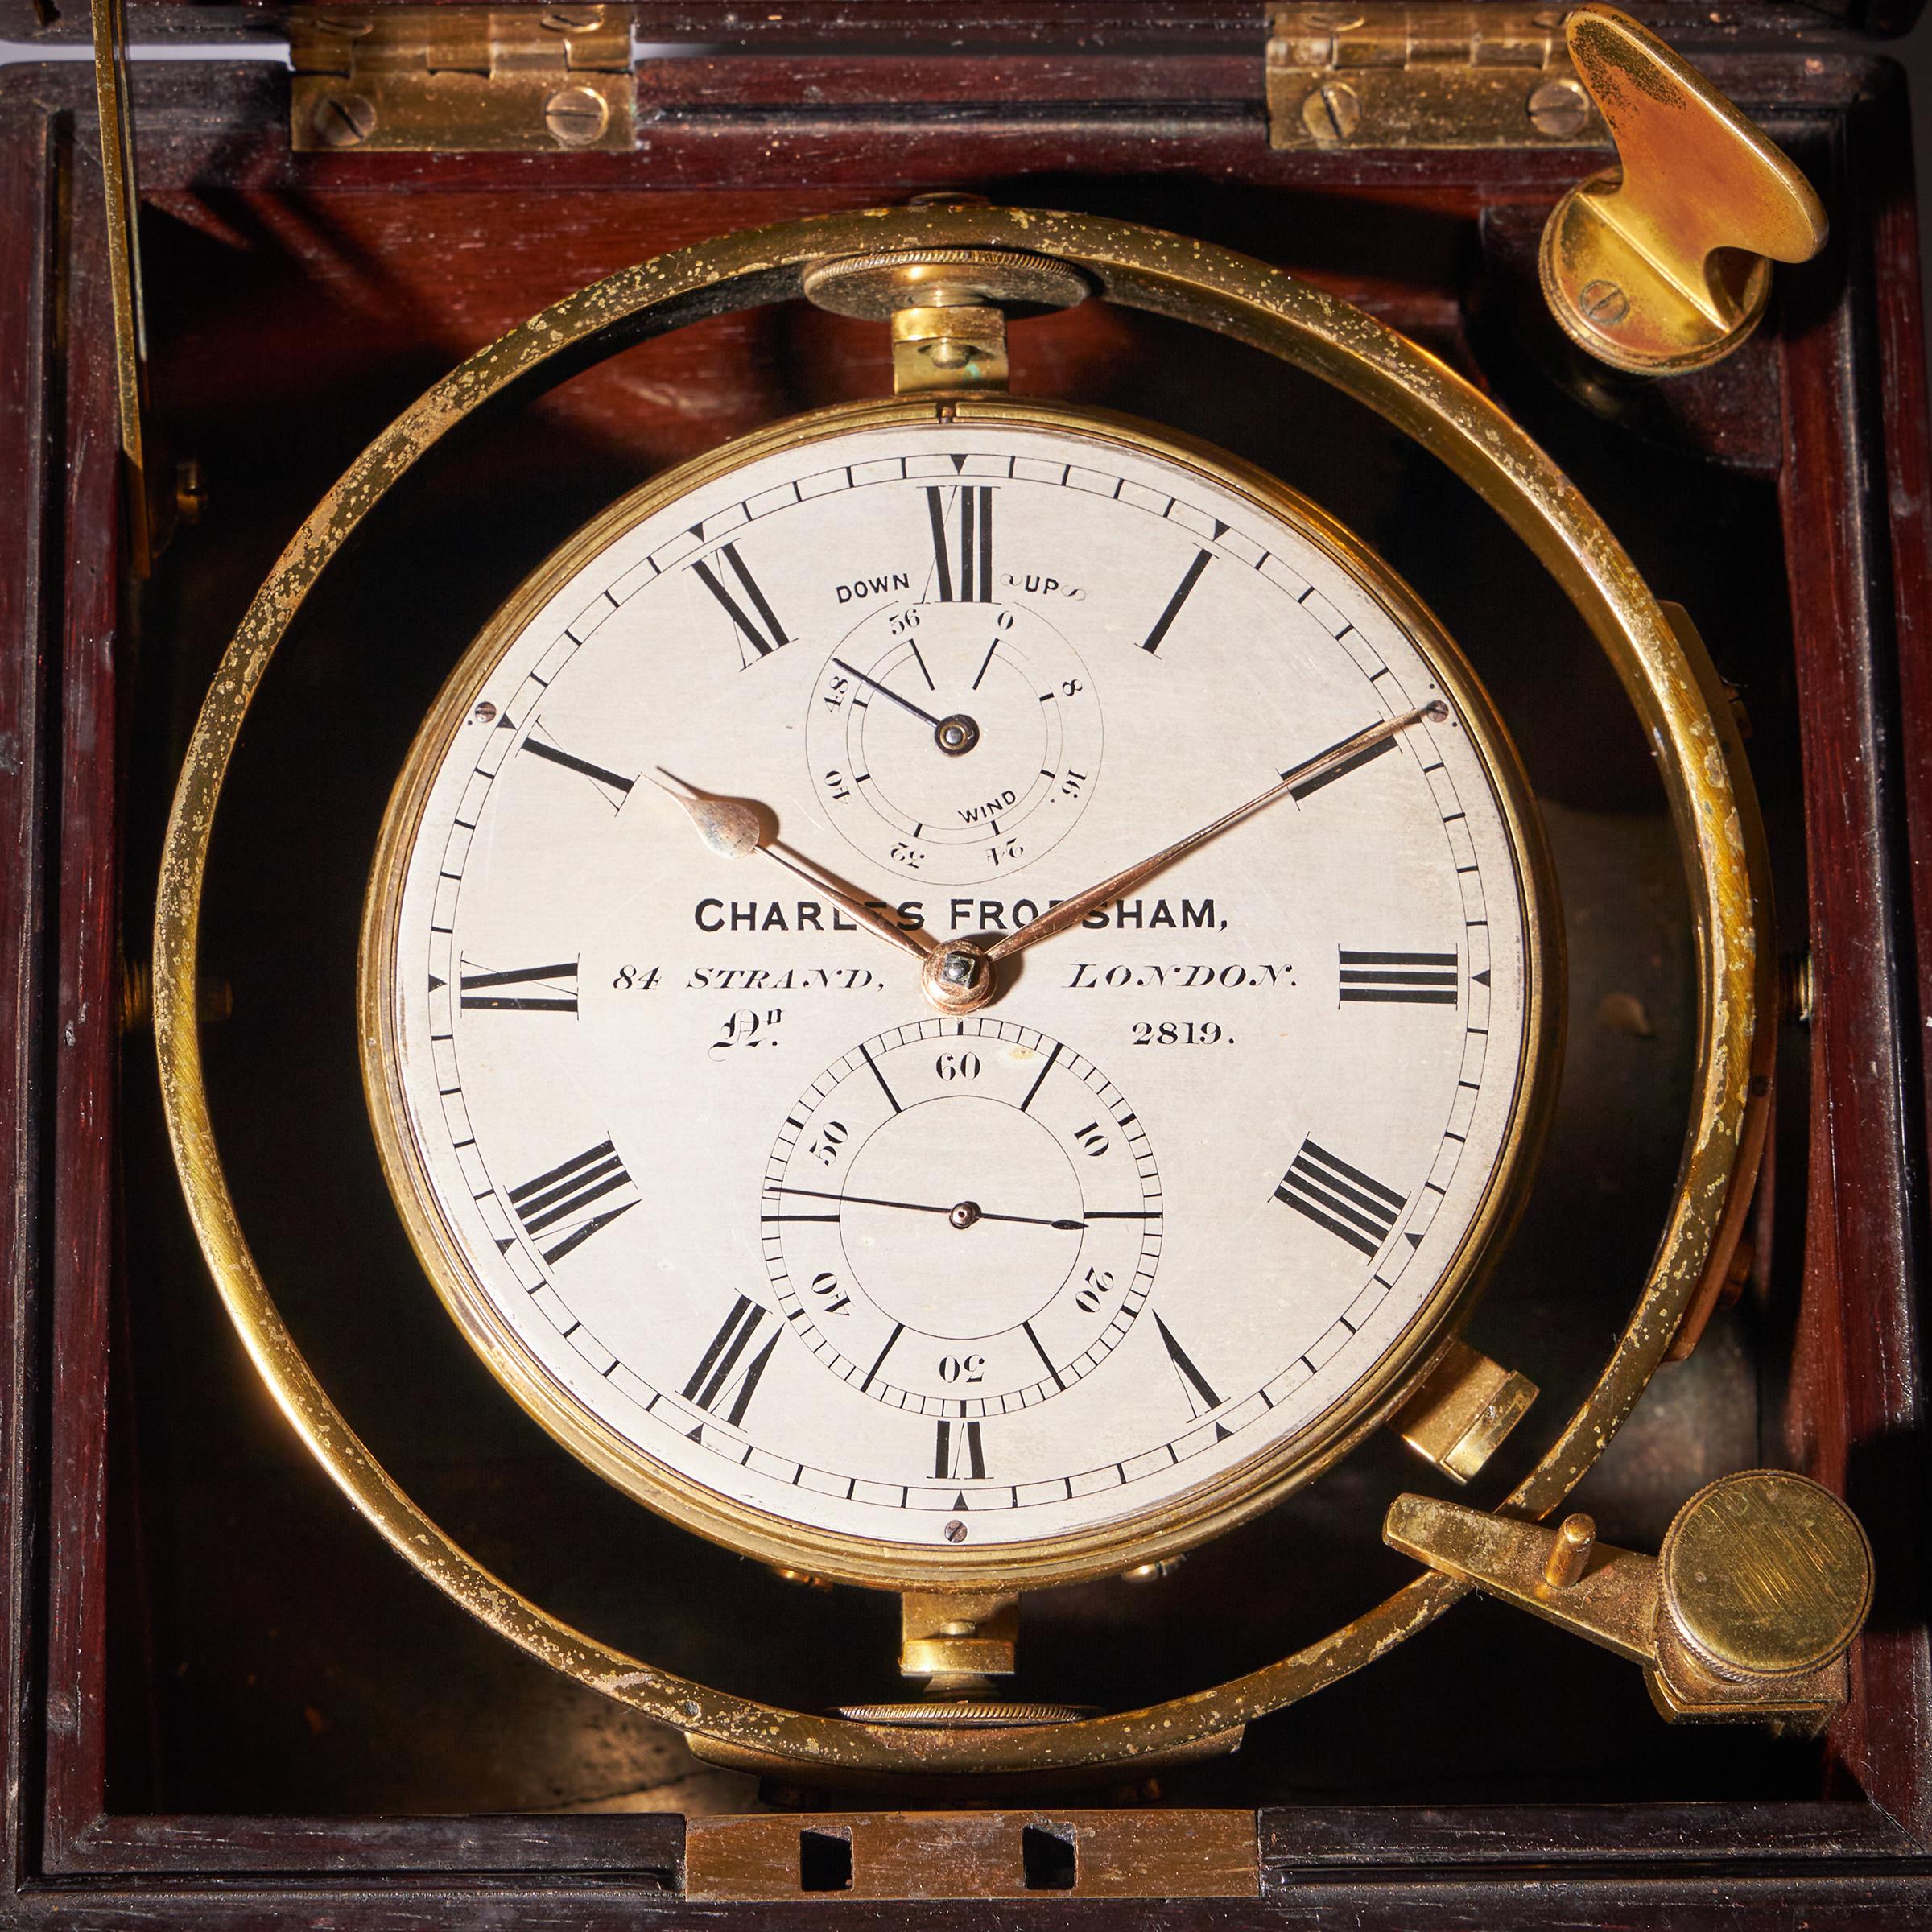 Fine Two-Day Marine Chronometer Signed Charles Frodsham-10